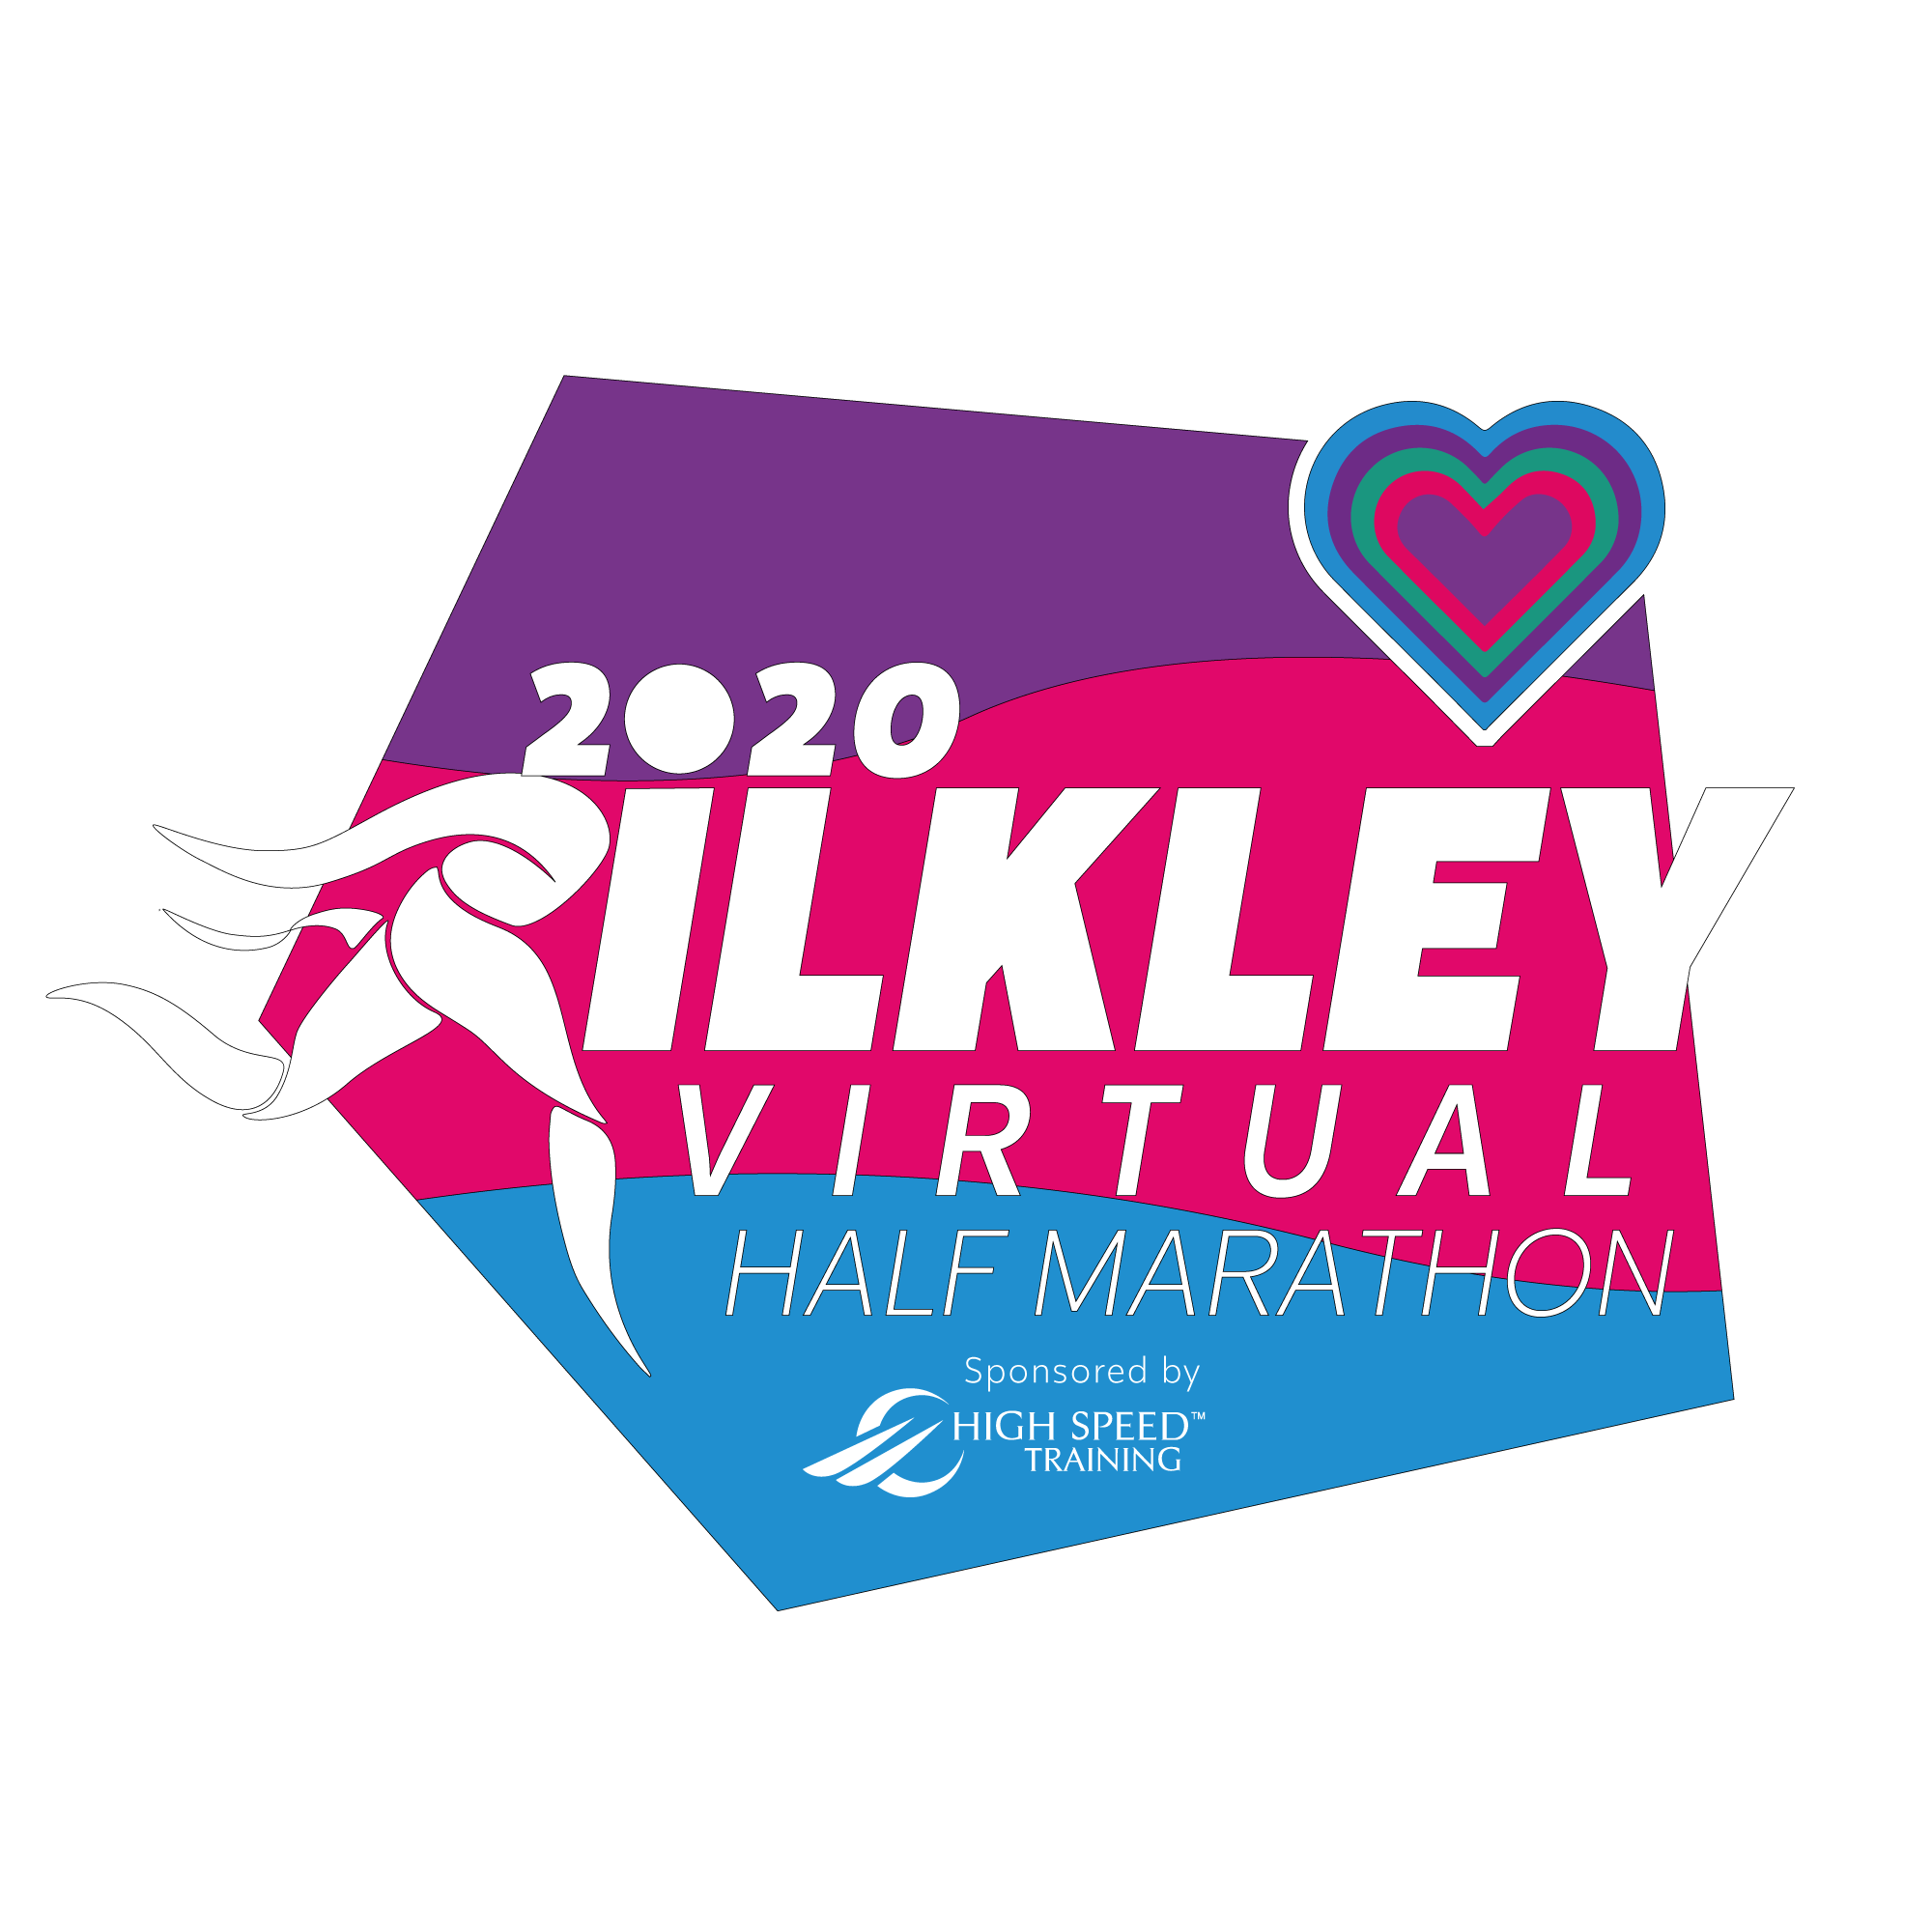 ilkley virtual half marathon with High Speed Training